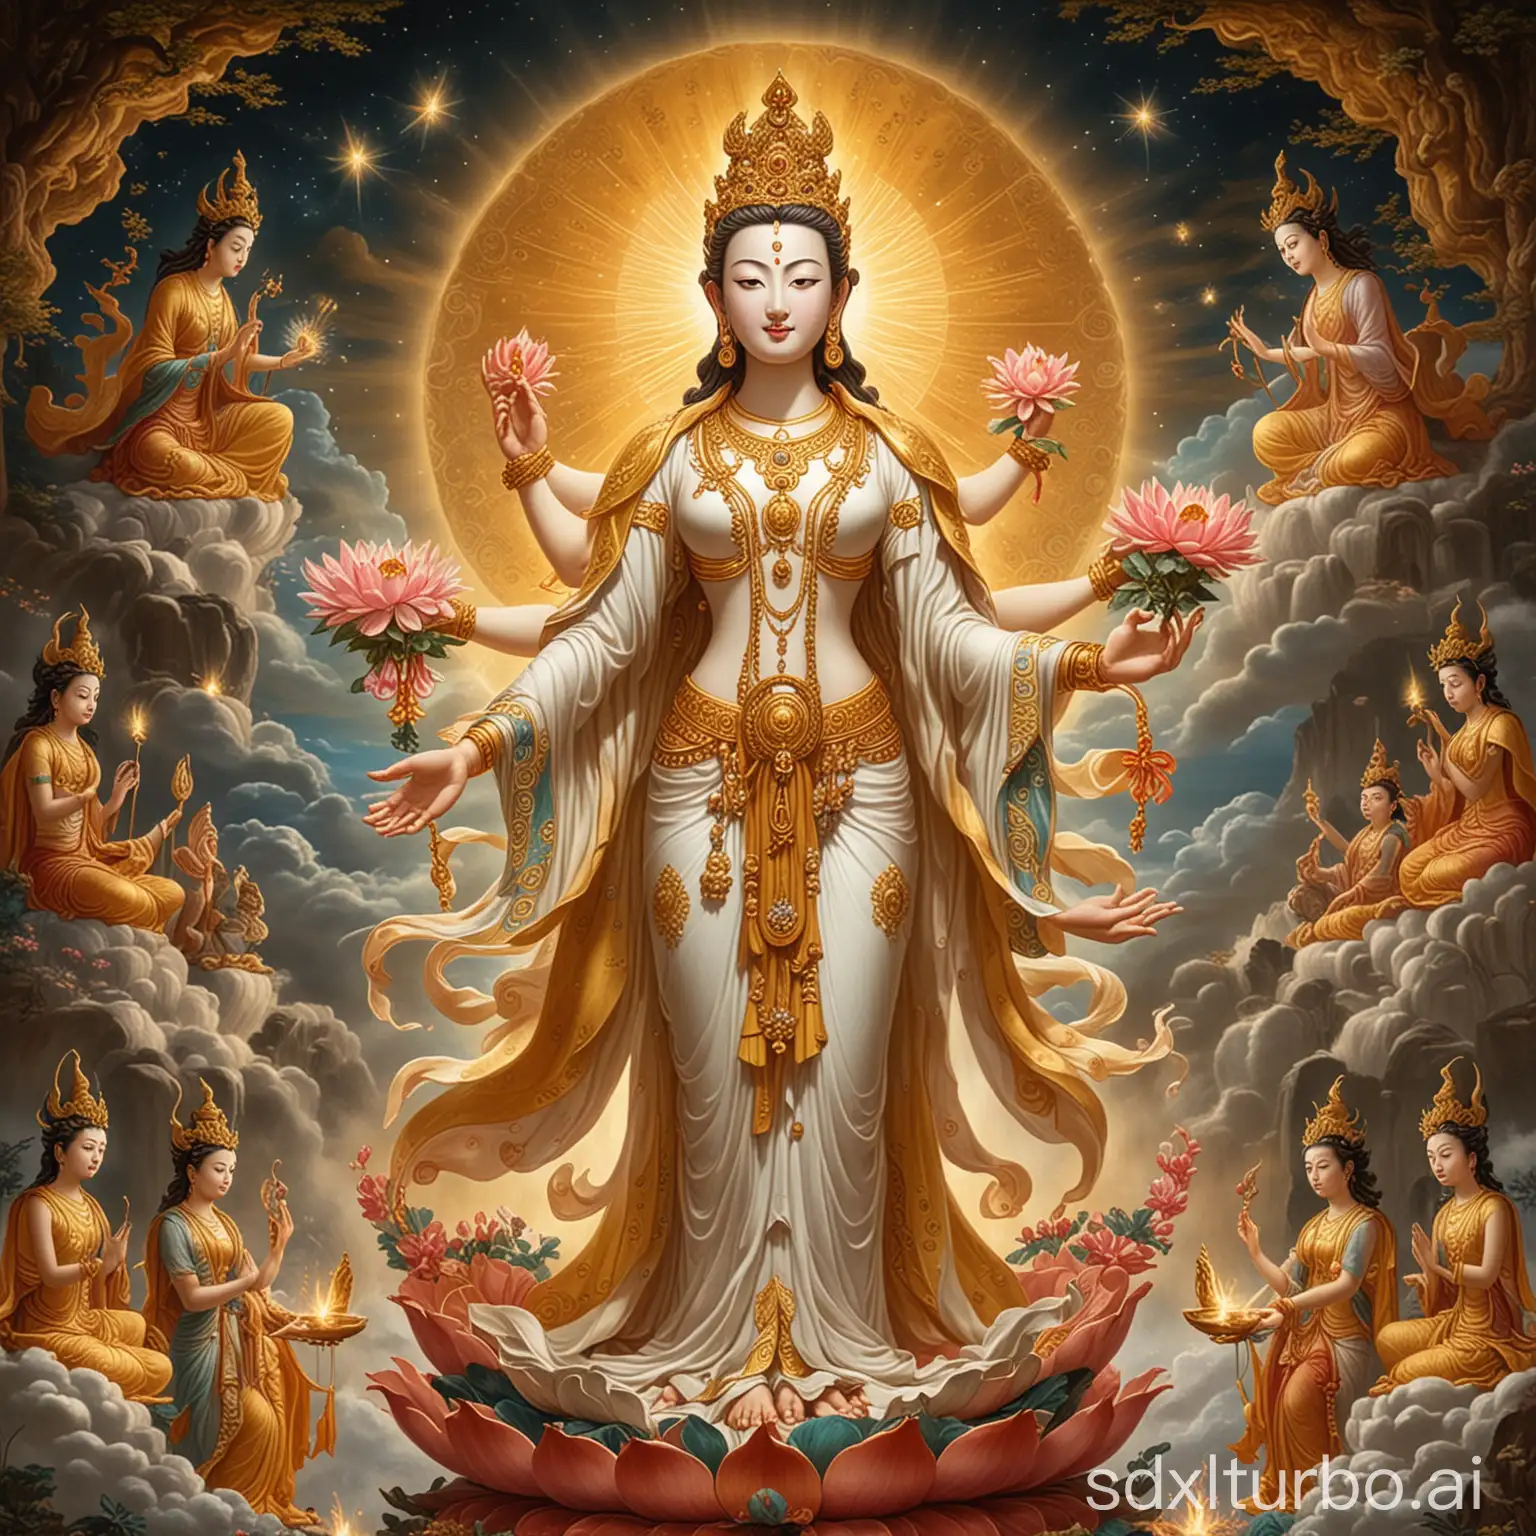 The Bodhisattva Avalokitesvara shines with the light of the Buddha